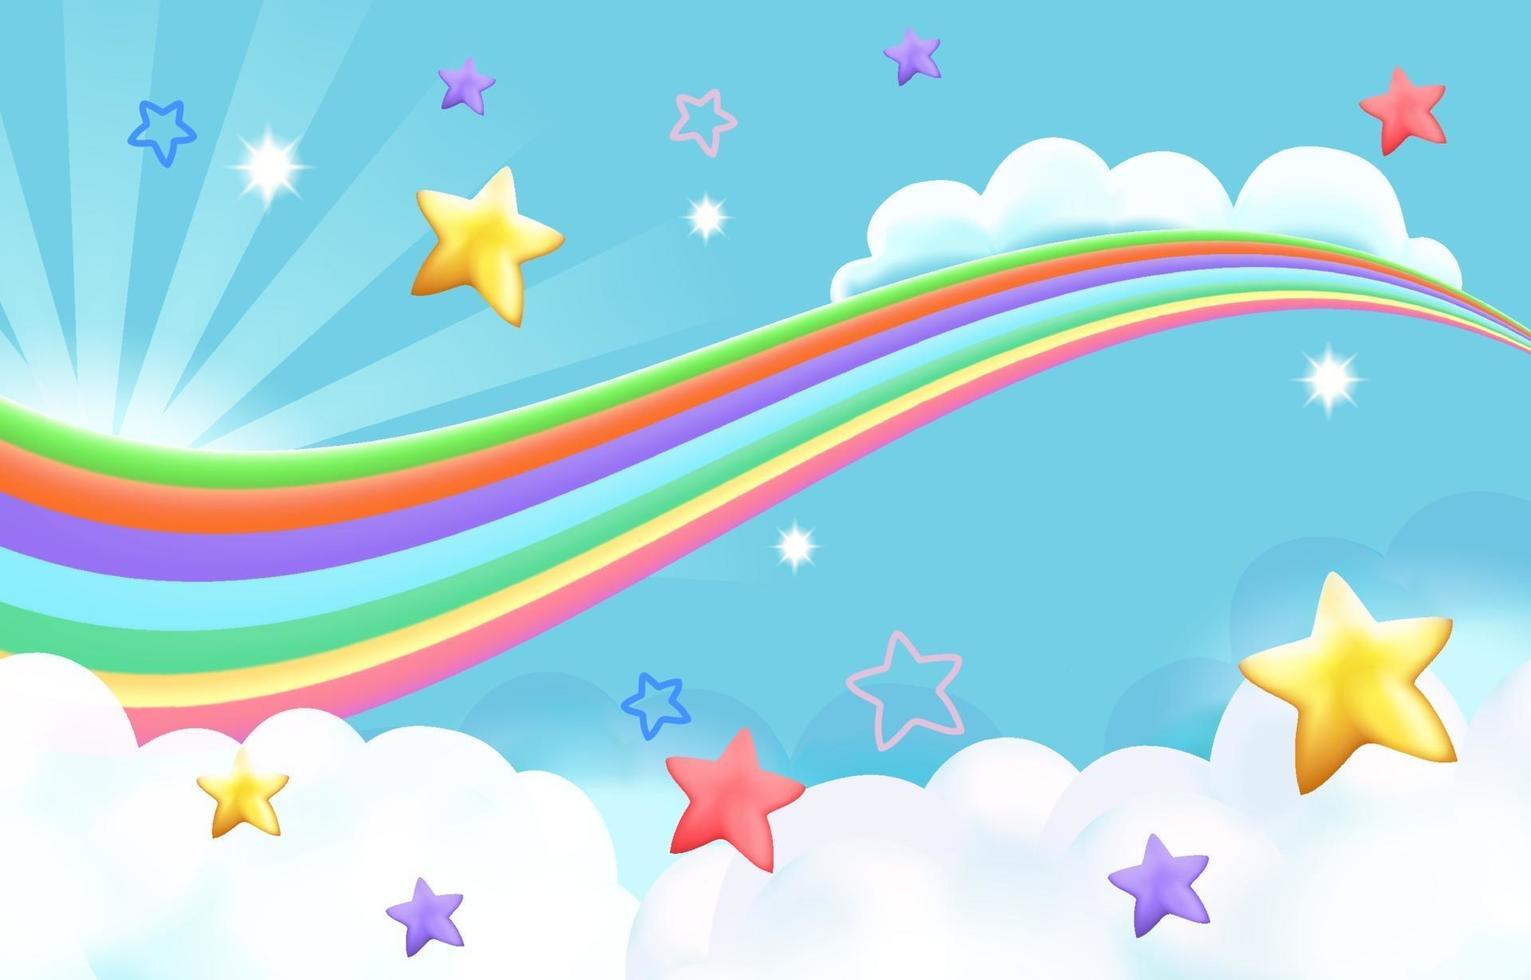 Cloudy fun rainbow background vector